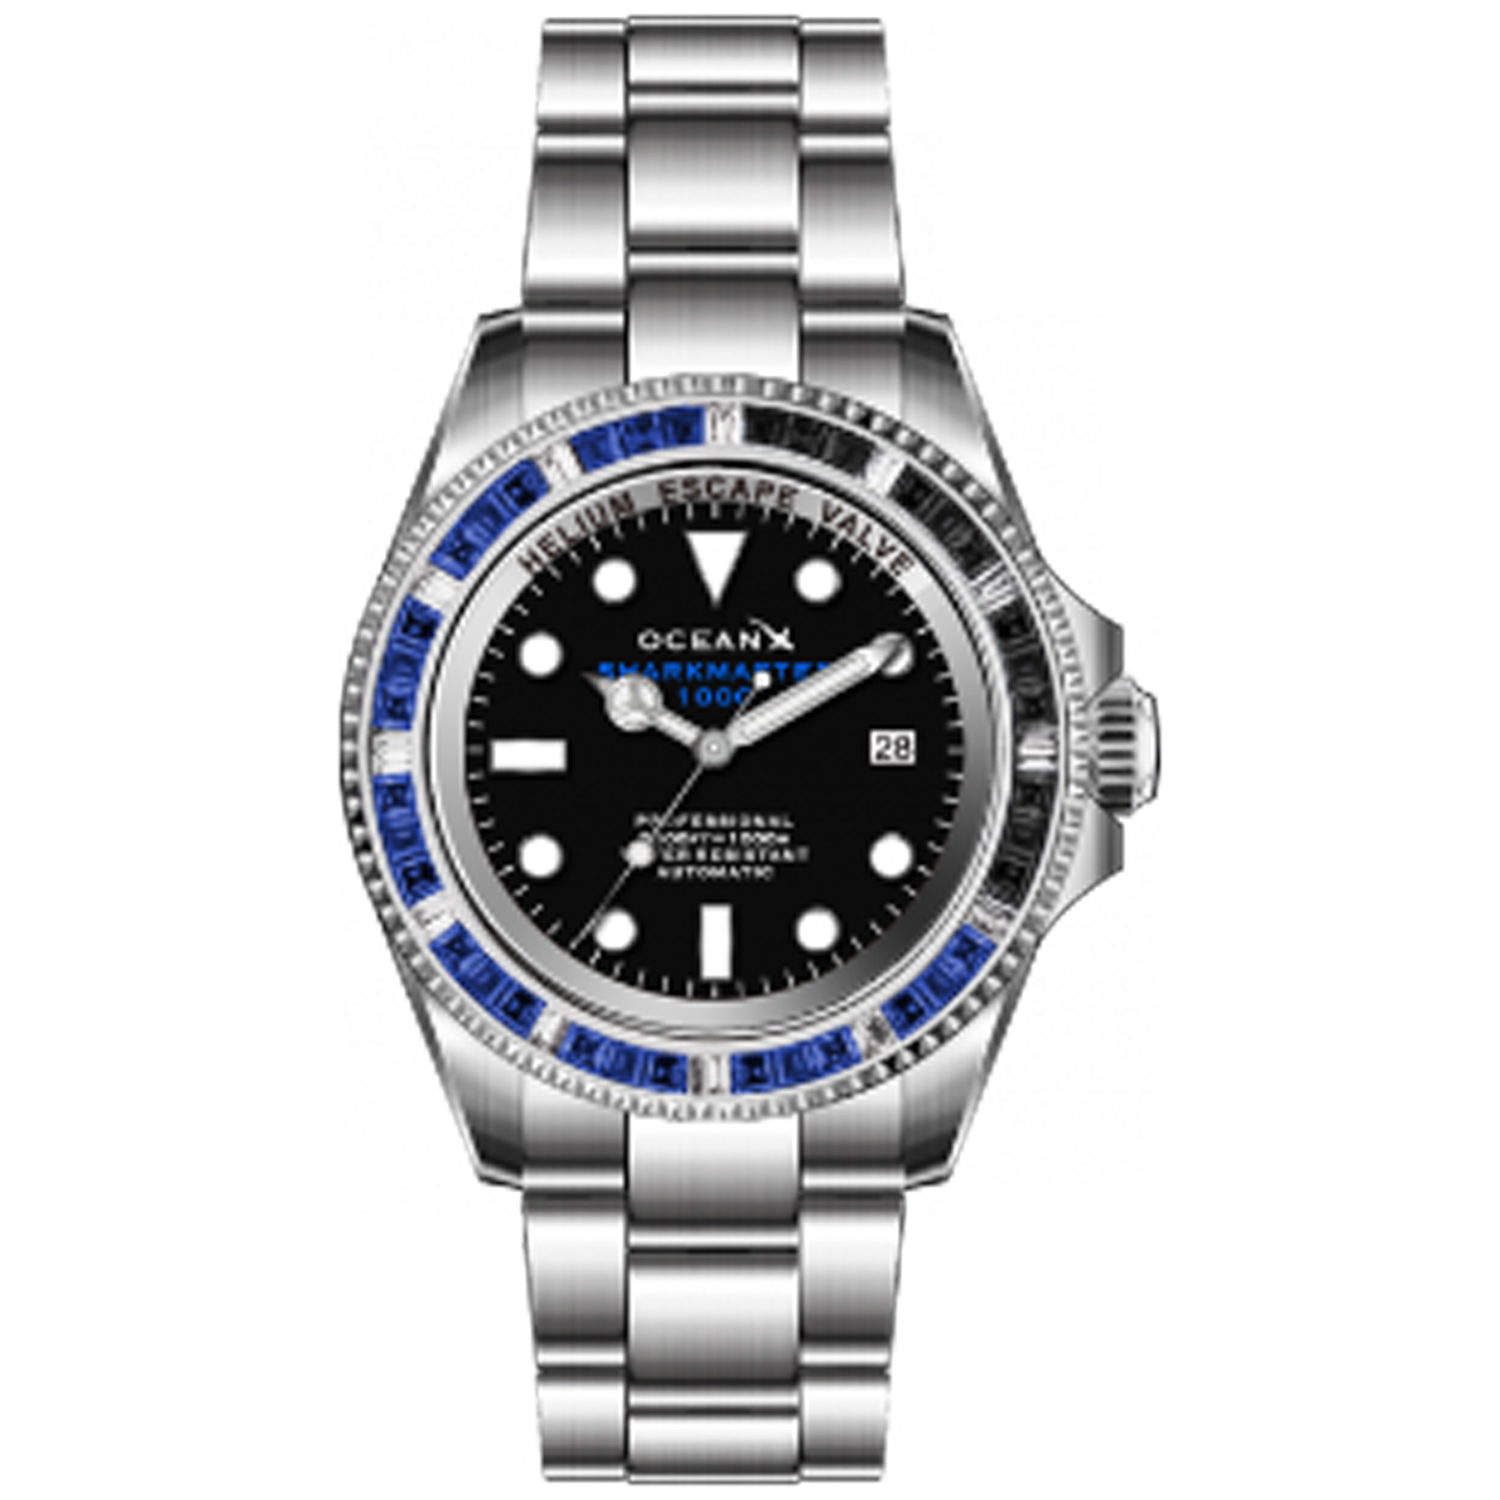 OceanX Sharkmaster 1000 Men\'s Diver Watch 44mm Baguette Crystal Bezel - Limited Edition SMS1044